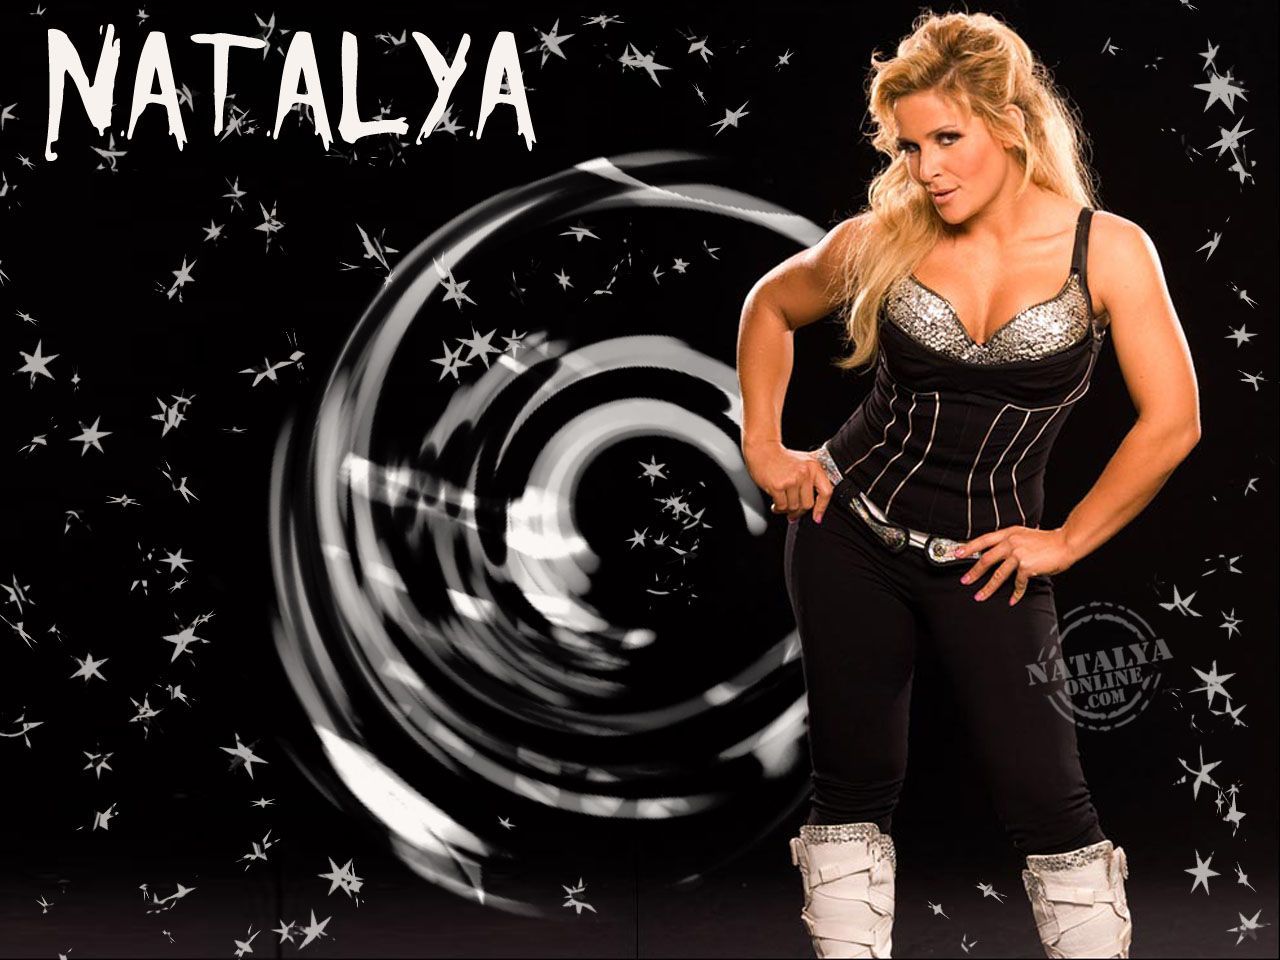 Natalya Neidhart. HD wallpaper, Wwe wallpaper, Wwe superstars